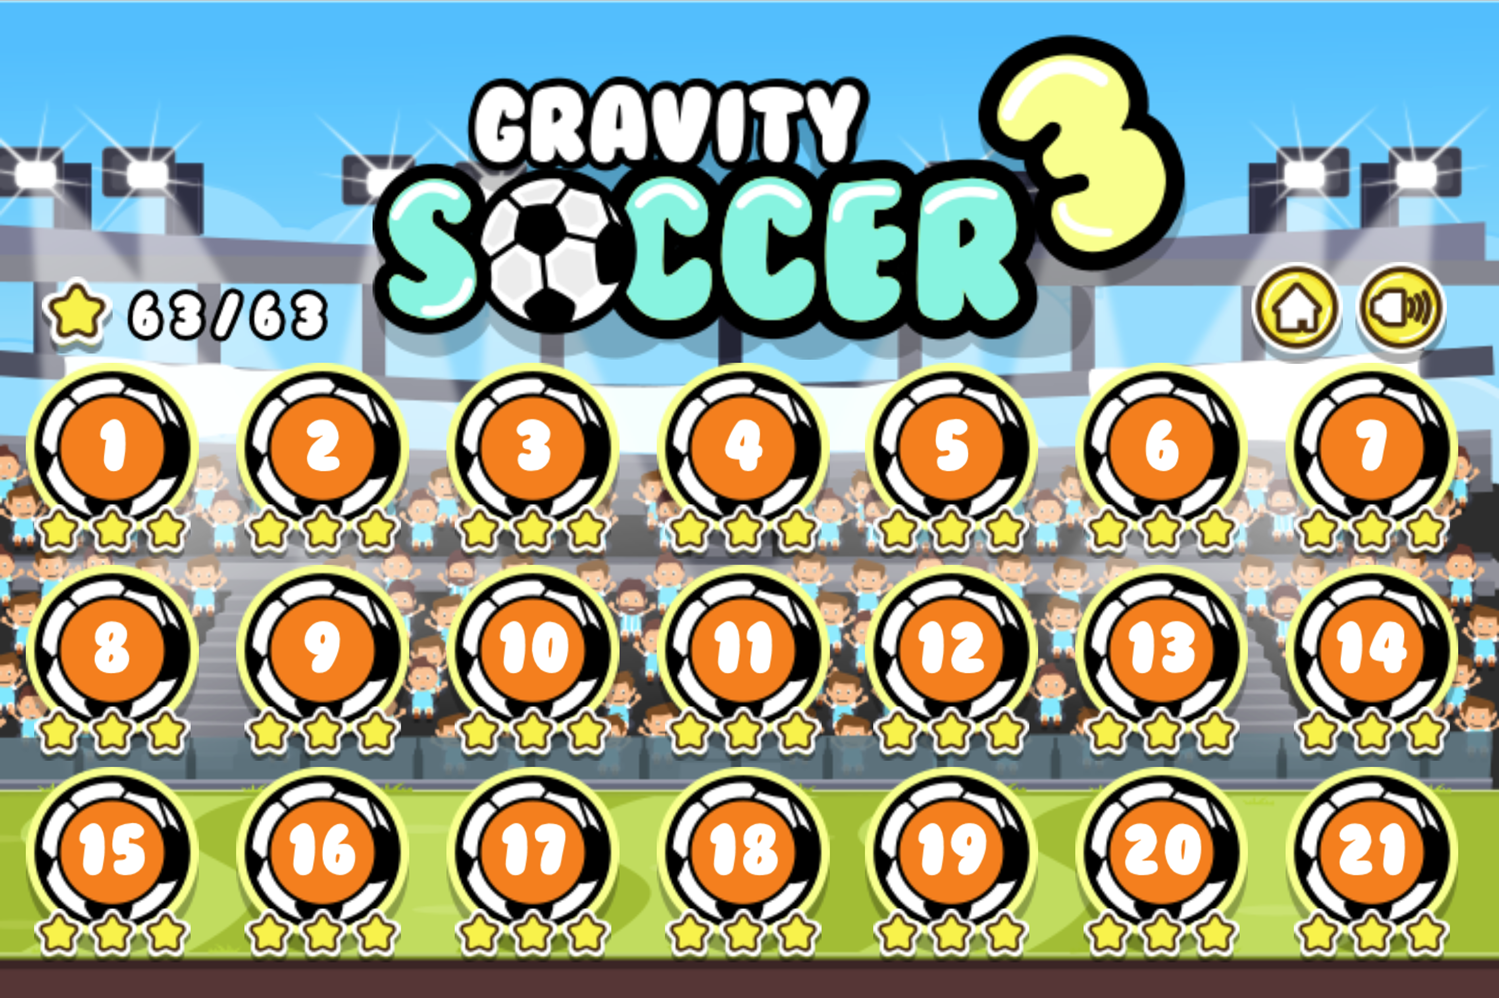 Gravity Soccer 3 Game Level Select Screen Screenshot.